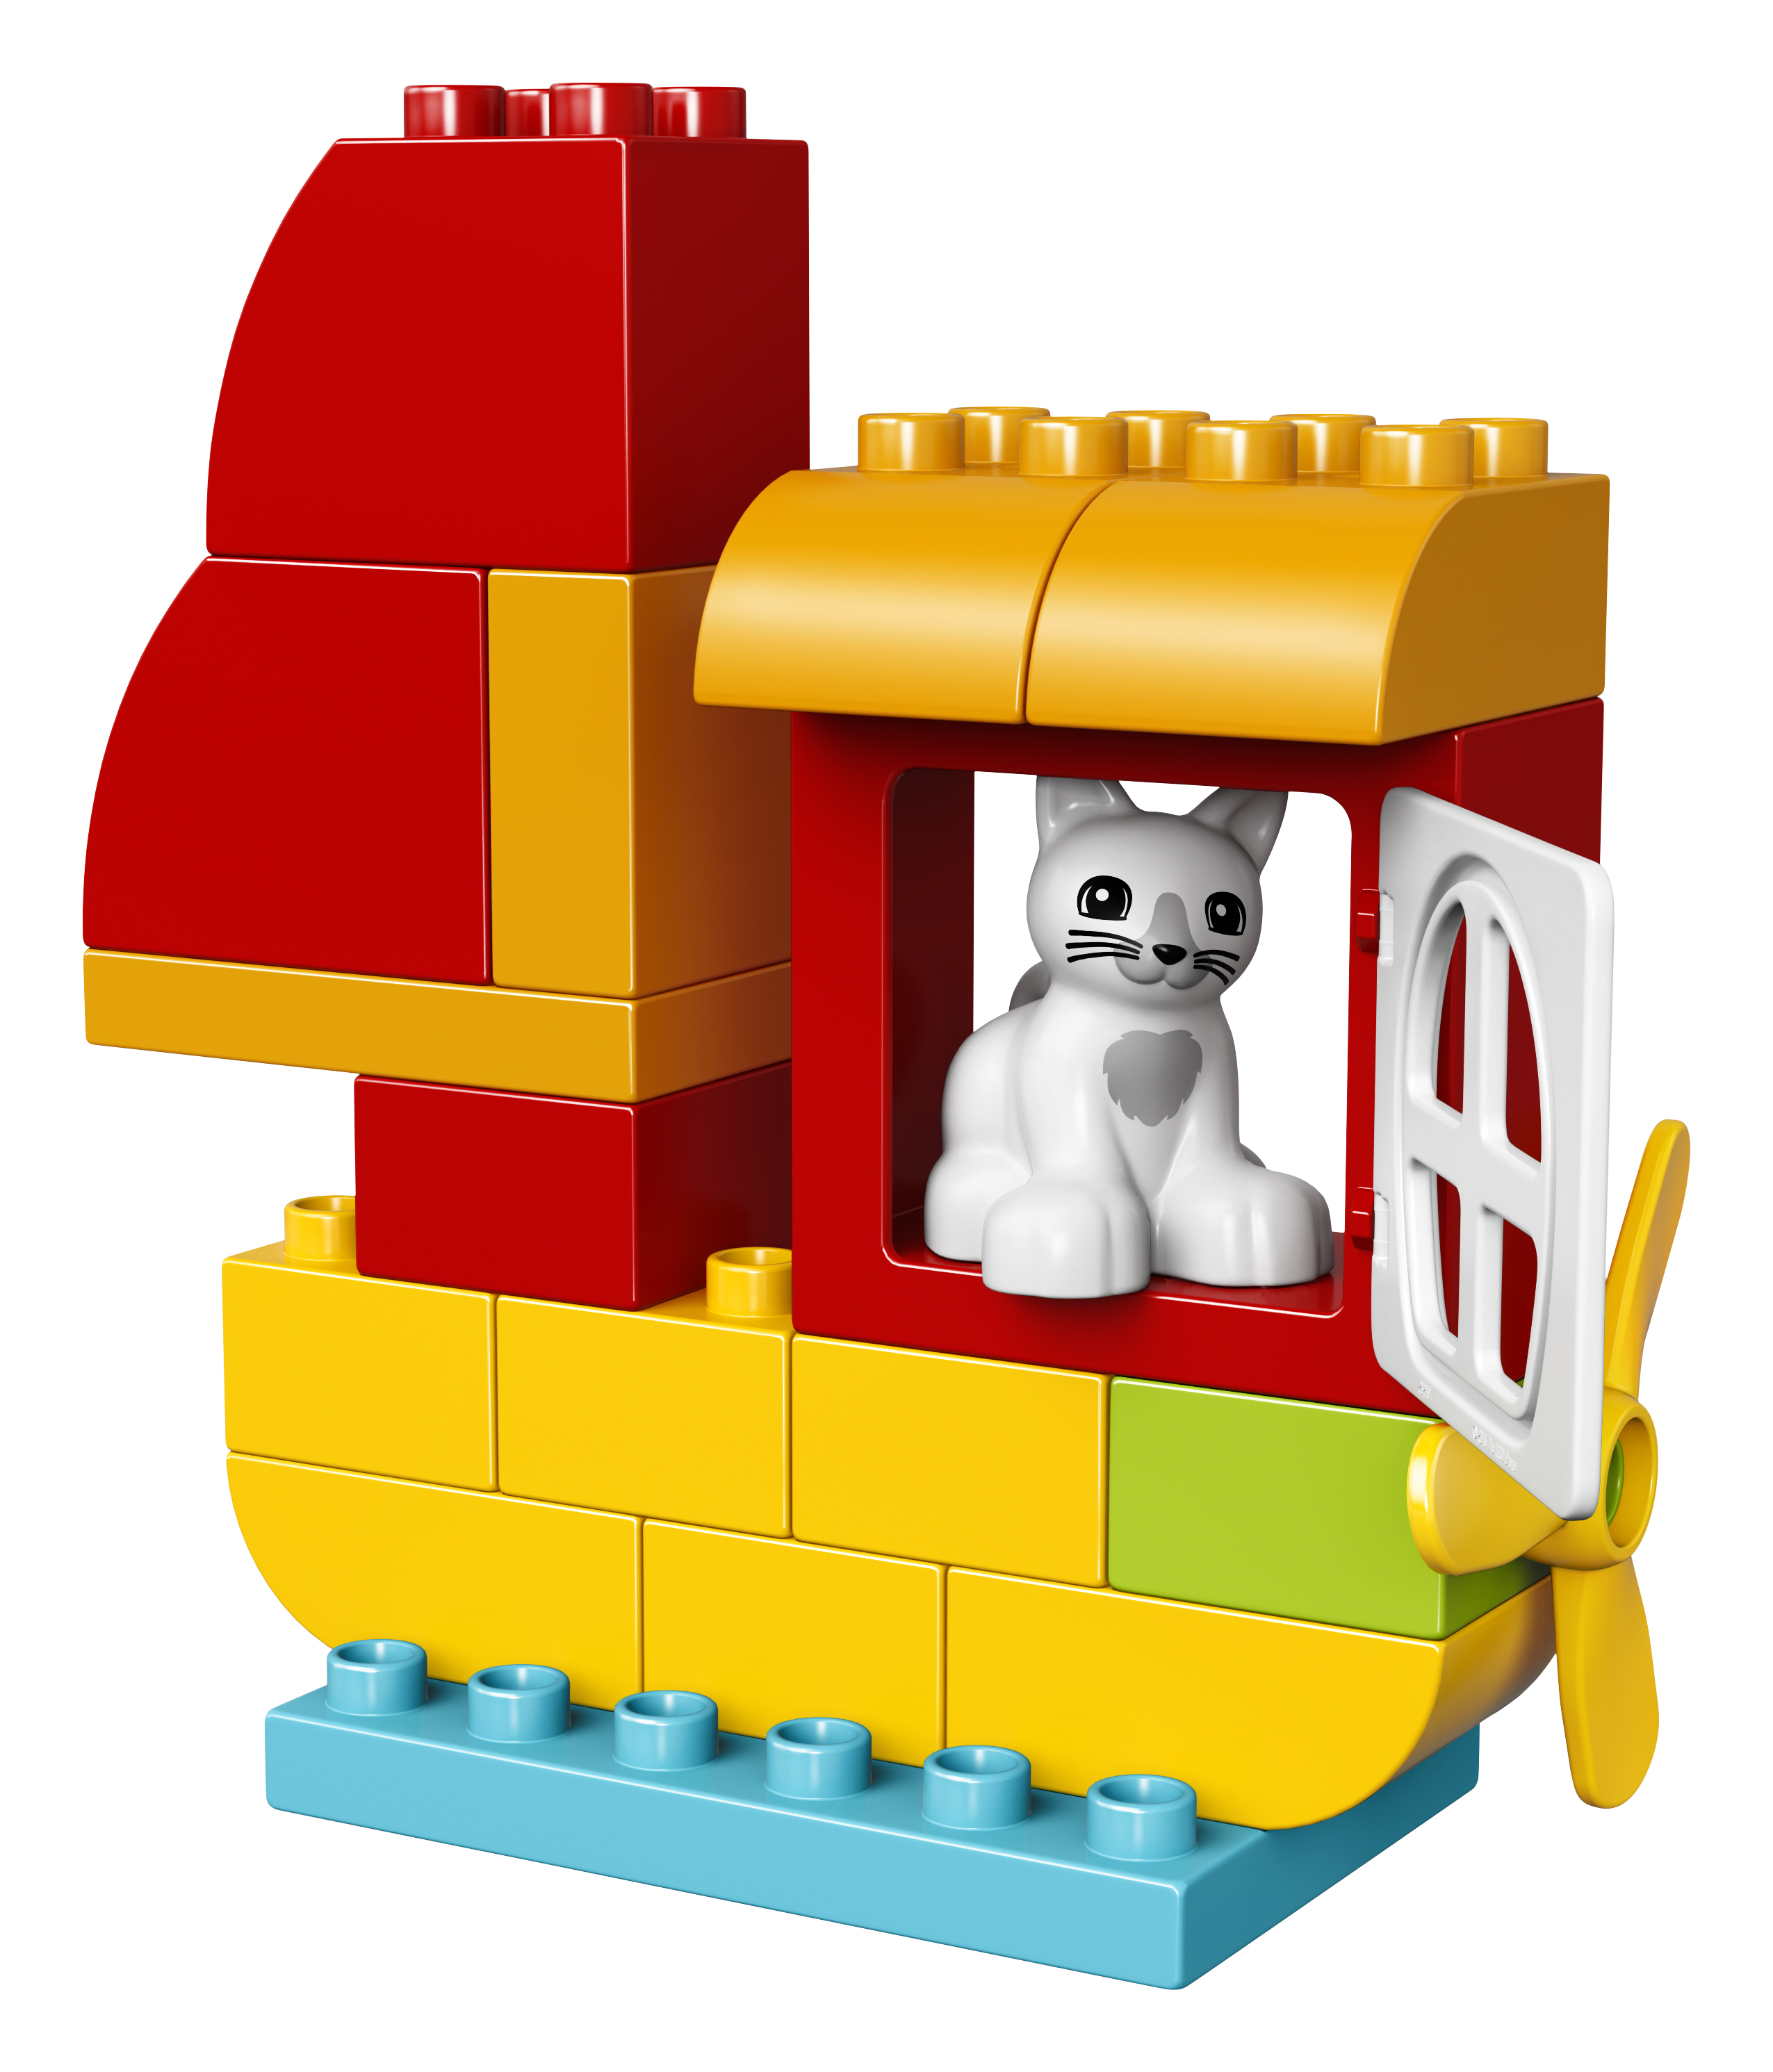 LEGO DUPLO Creative Box 10854 - image 3 of 6